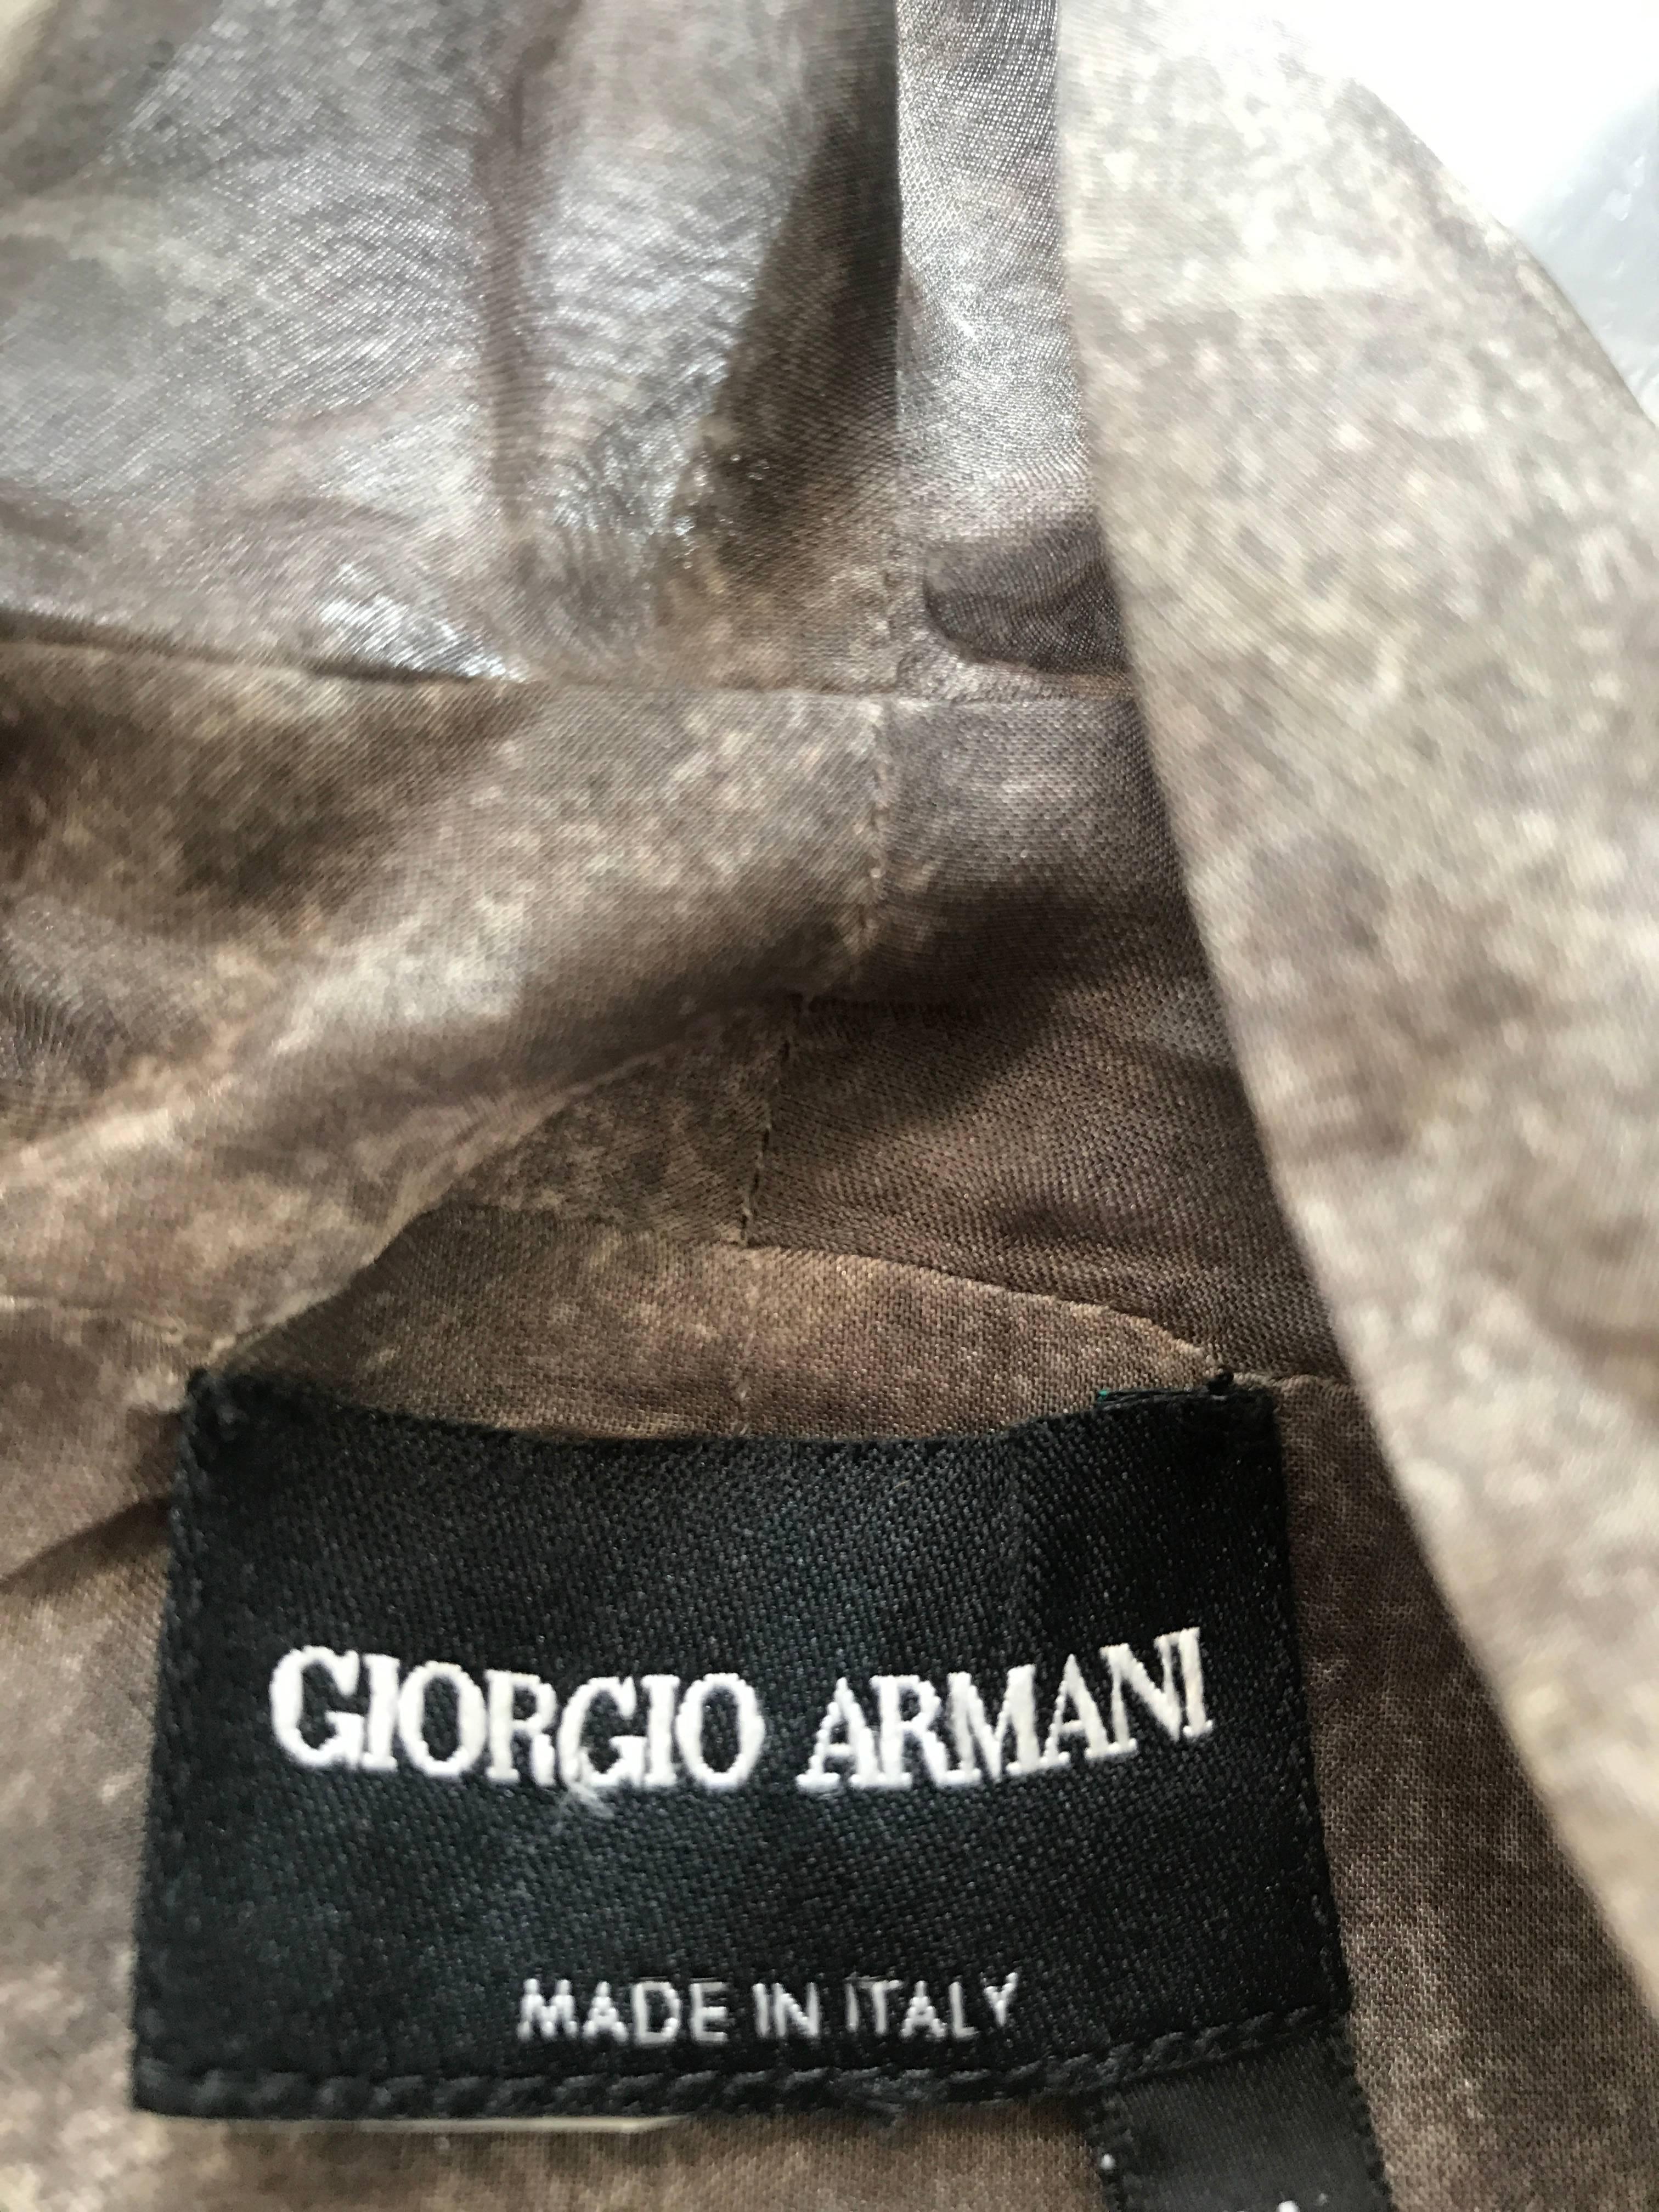 Giorgio Armani 1990s Silver Gunmetal Avant Garde Vintage 90s Silk Blouse Top For Sale 5